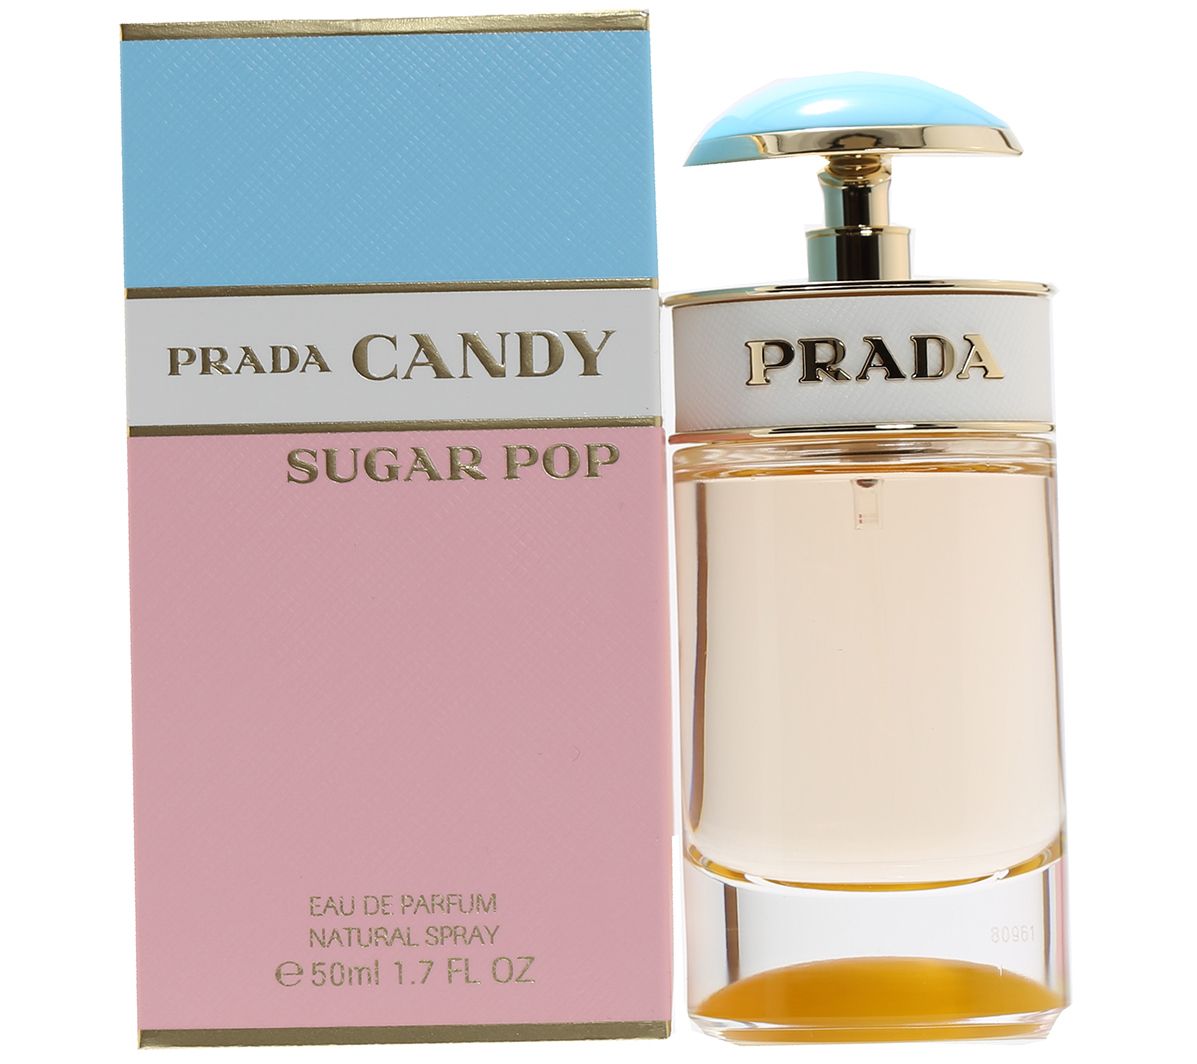 De Parfum Spray ies Pop Prada - Lad Candy Sugar Eau